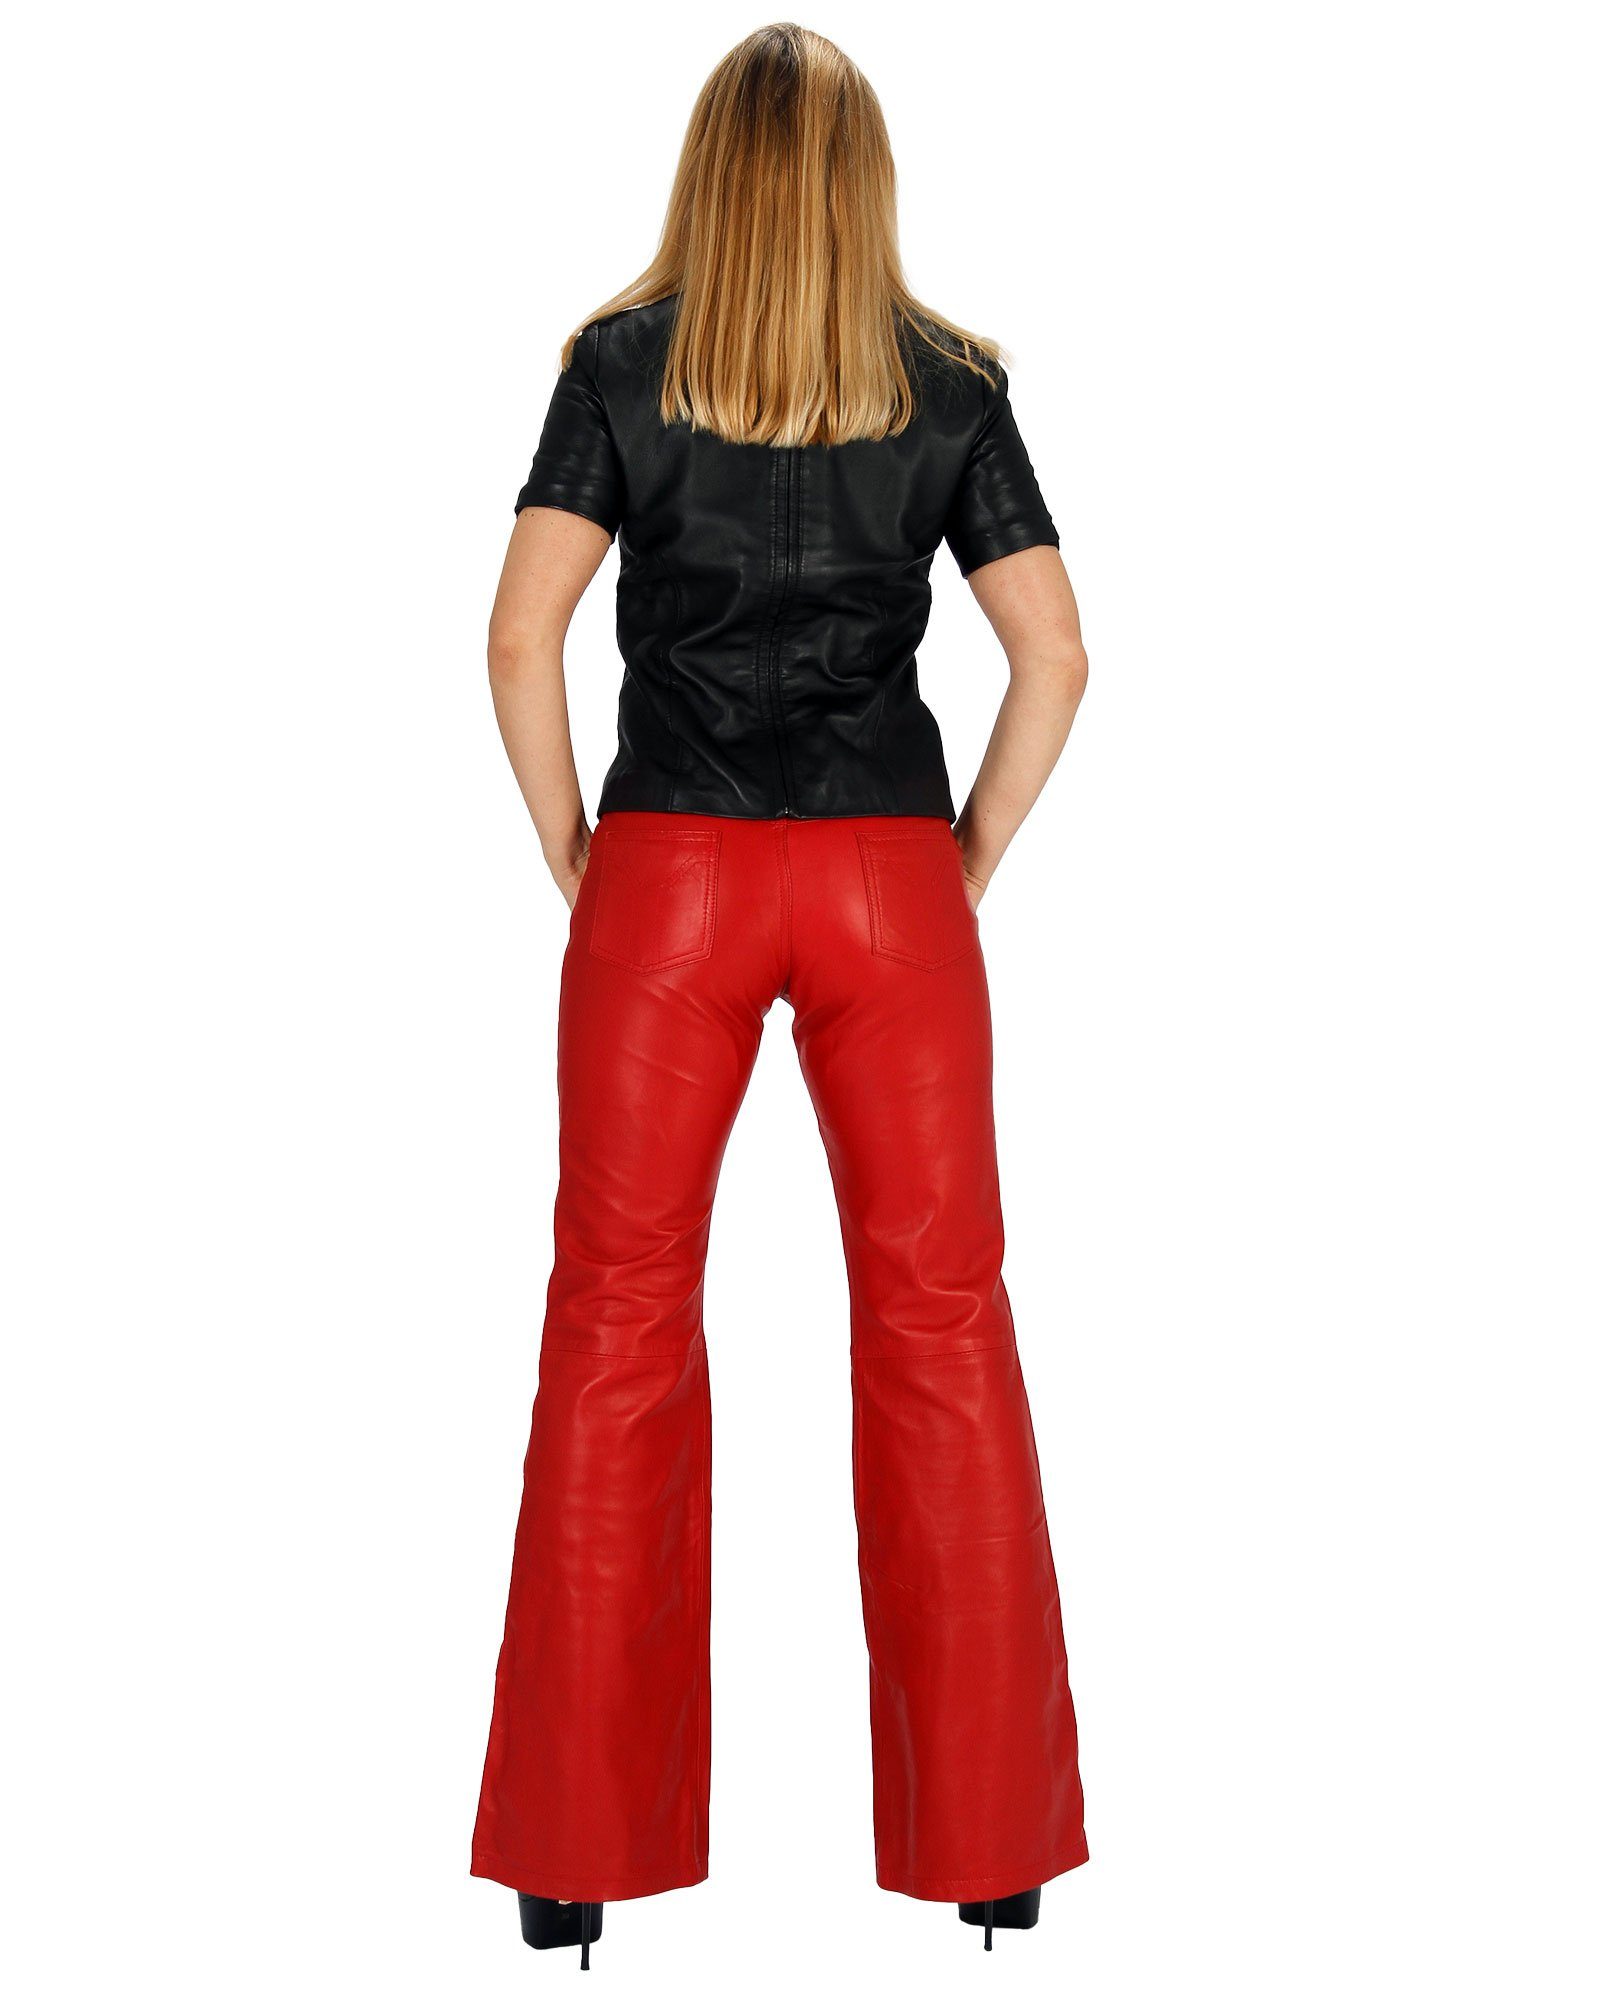 Lamm Lederhose echtem Style Fetish-Design Ausgestelltes 5-Pocket Bootcut Leder Lederhose Rot aus Nappa Bein